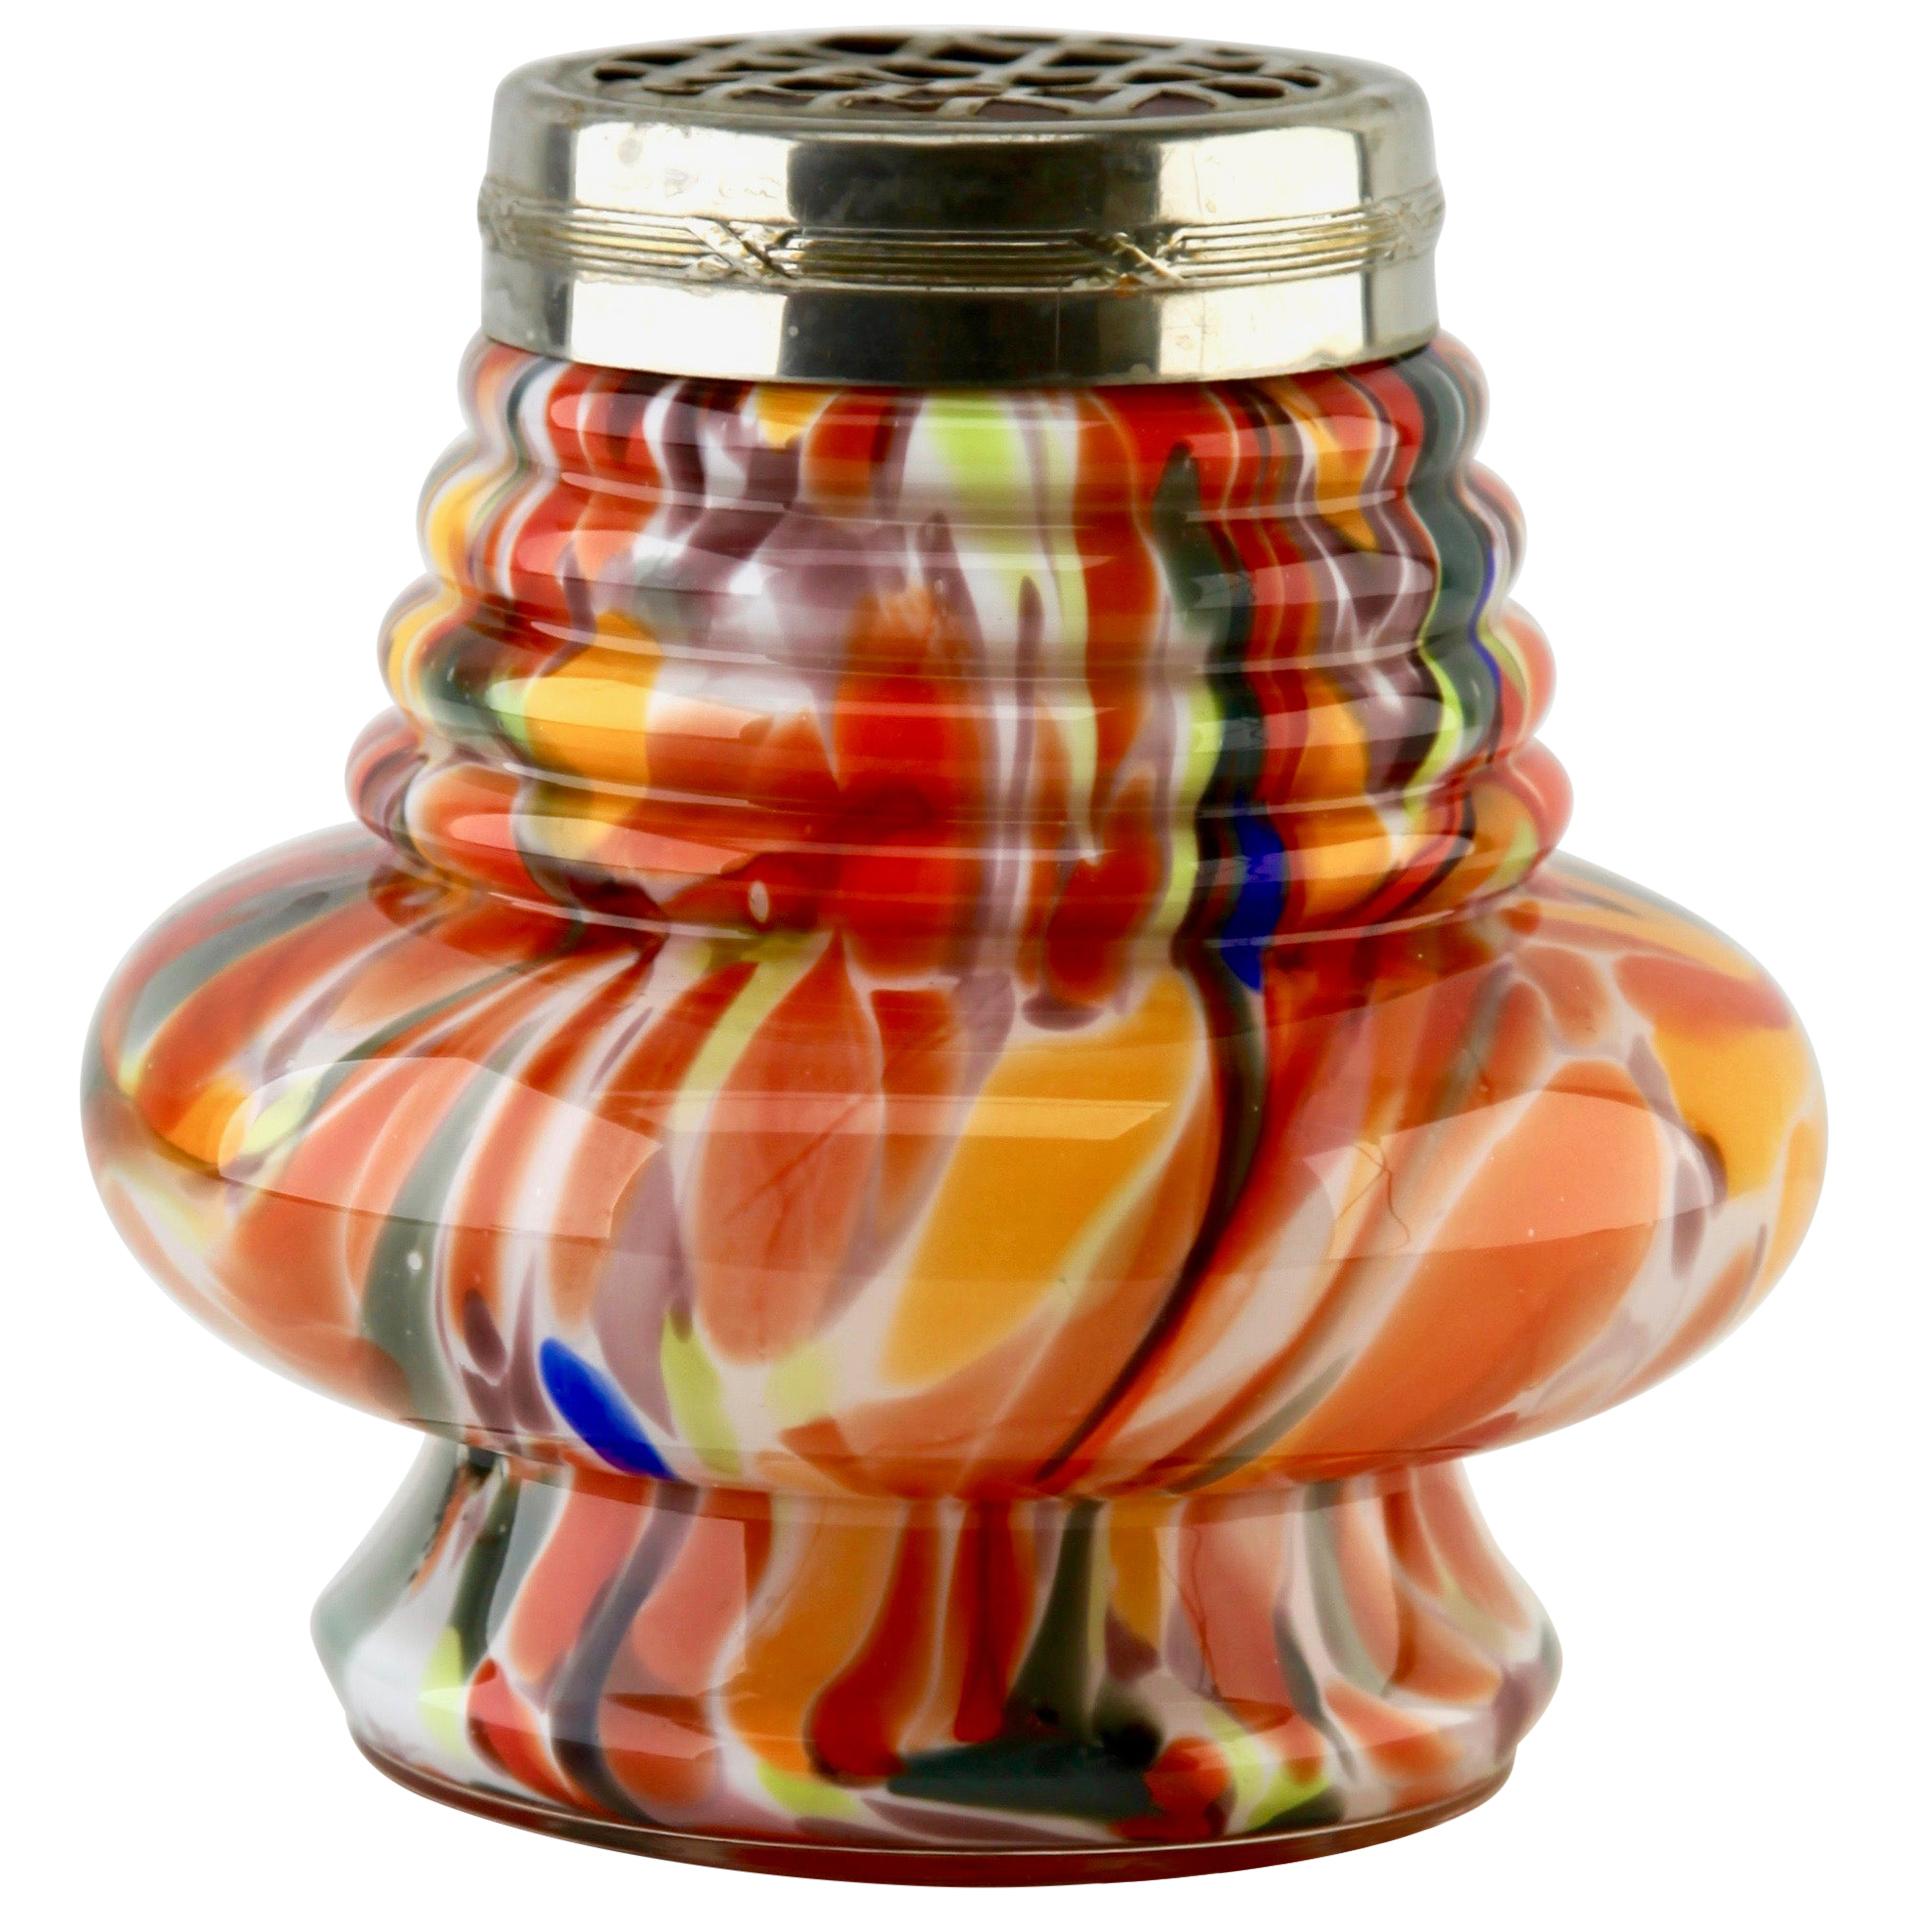 'Pique Fleurs' Vase in Multicolored Splatter Glass, with Grille